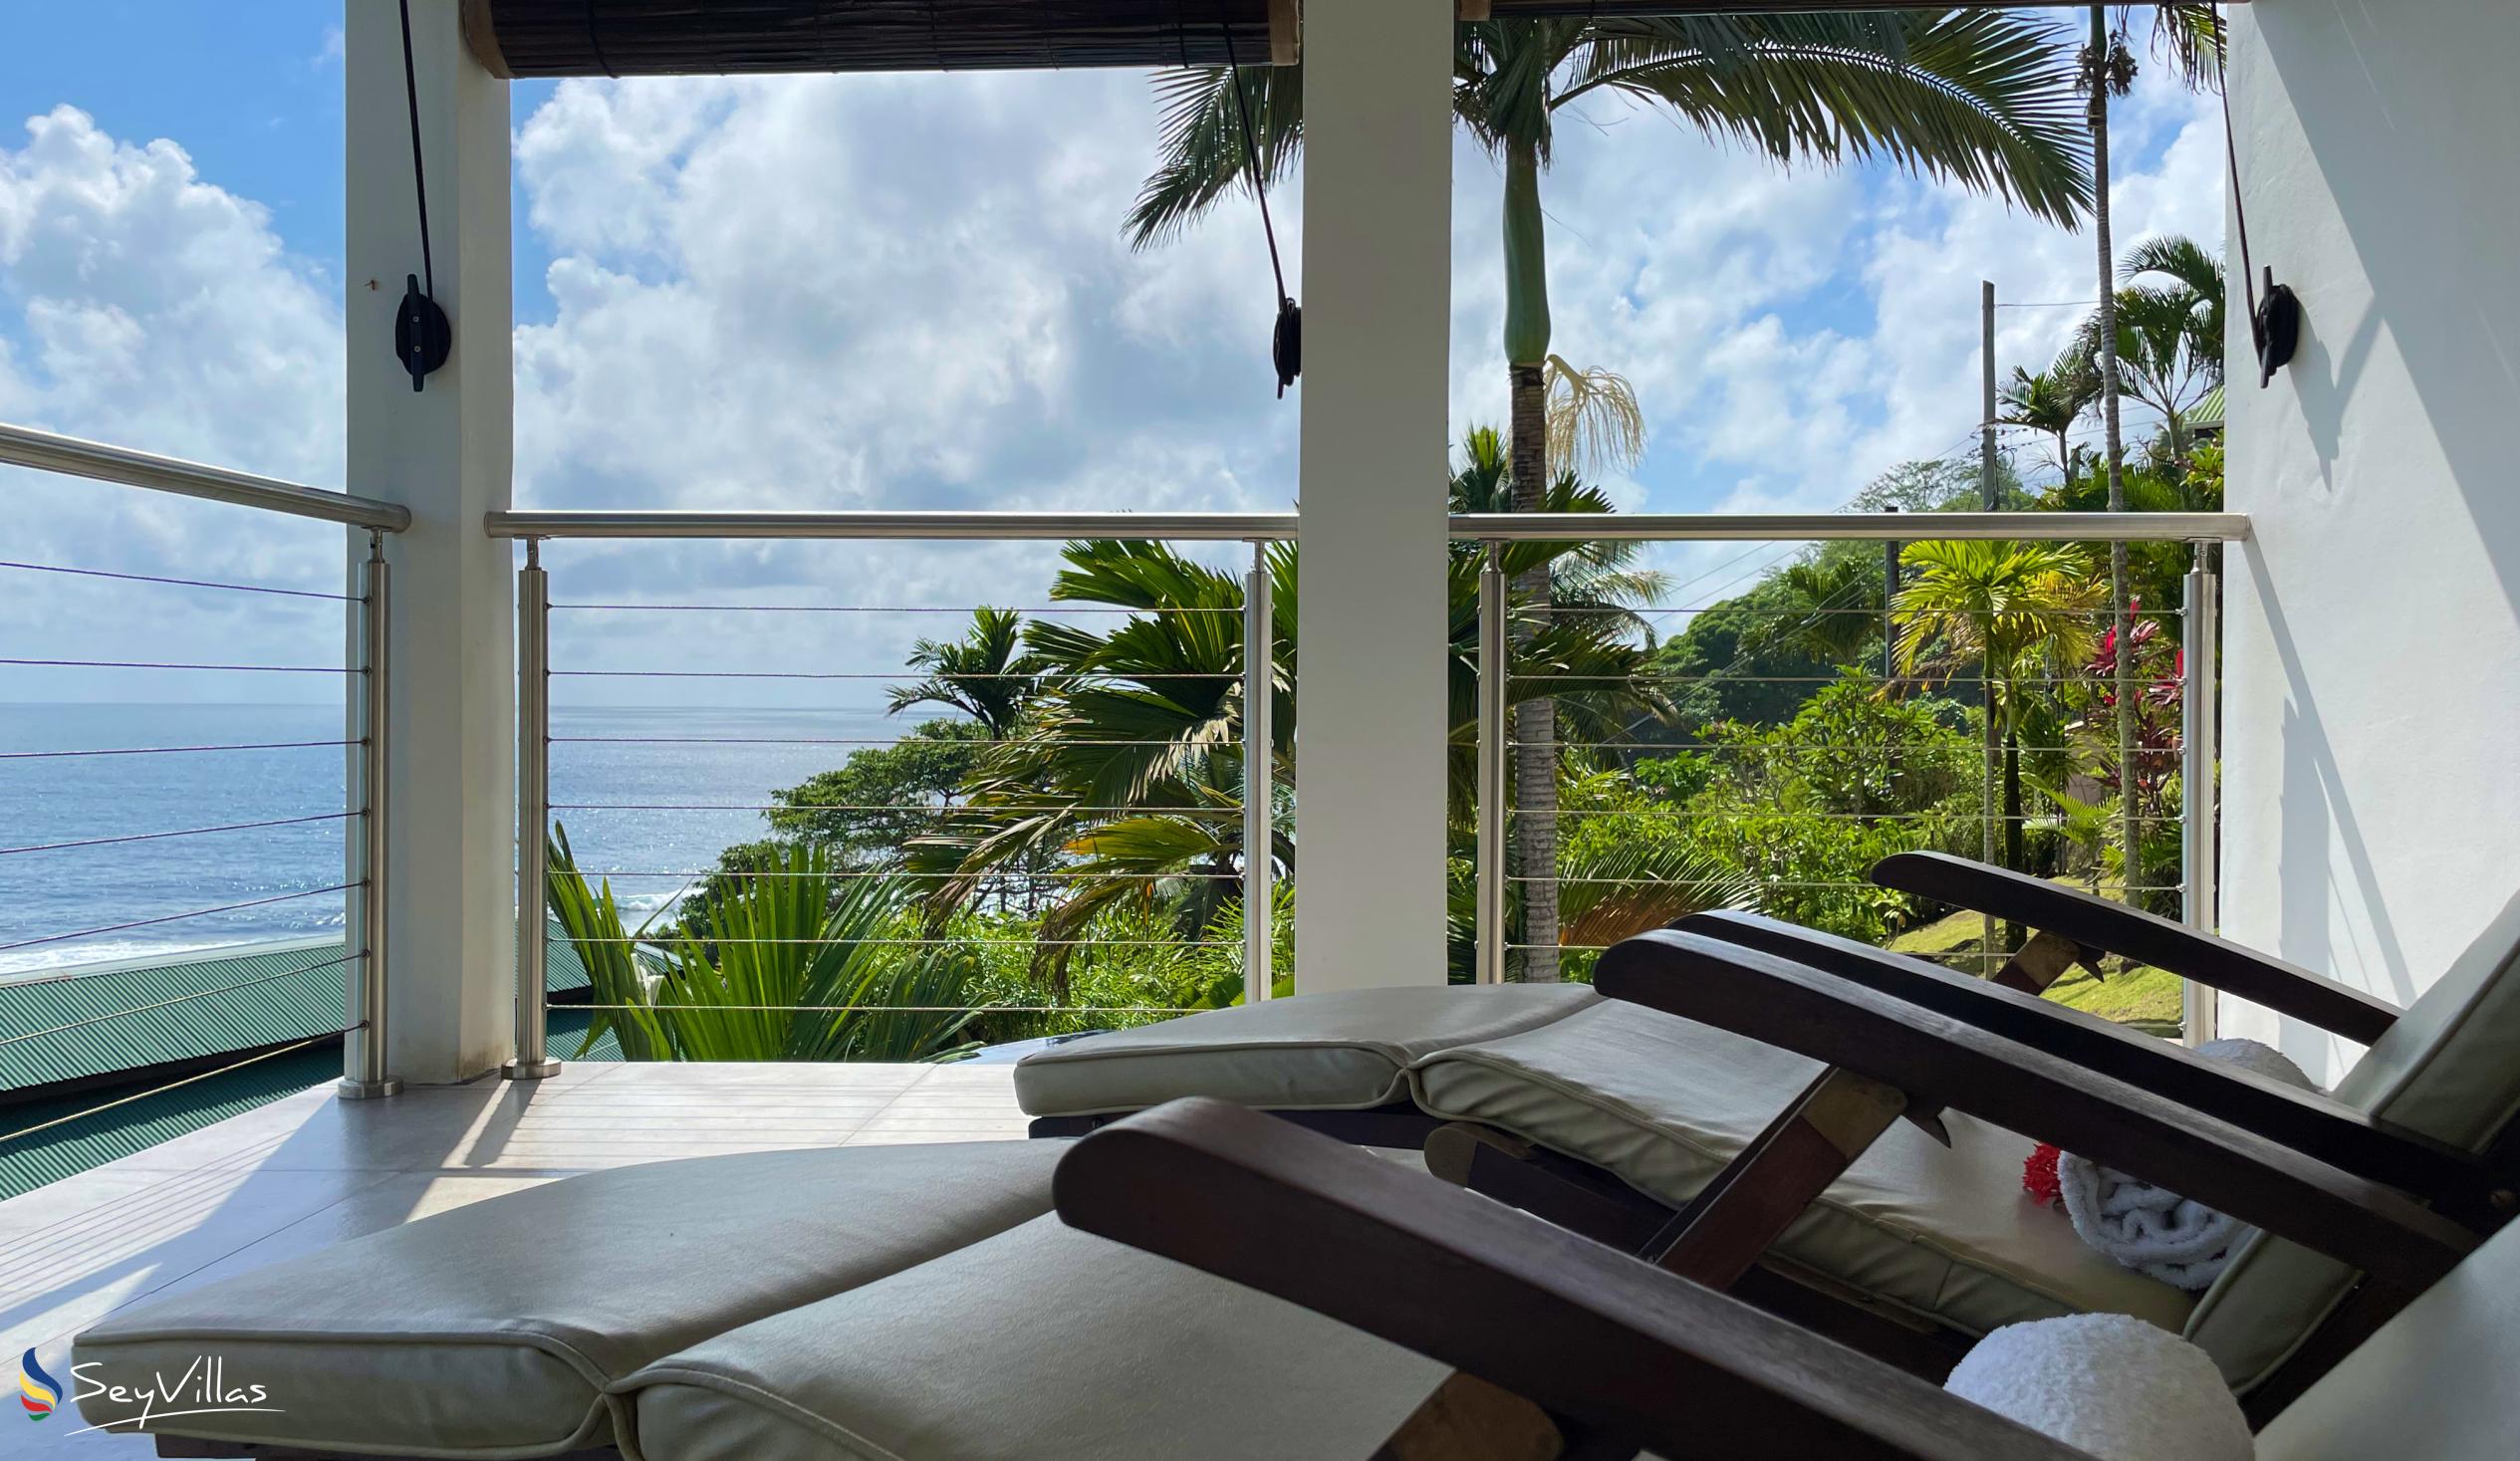 Foto 106: Chalets Bougainville - Appartamento Piano Terra Villa Lemon - Mahé (Seychelles)